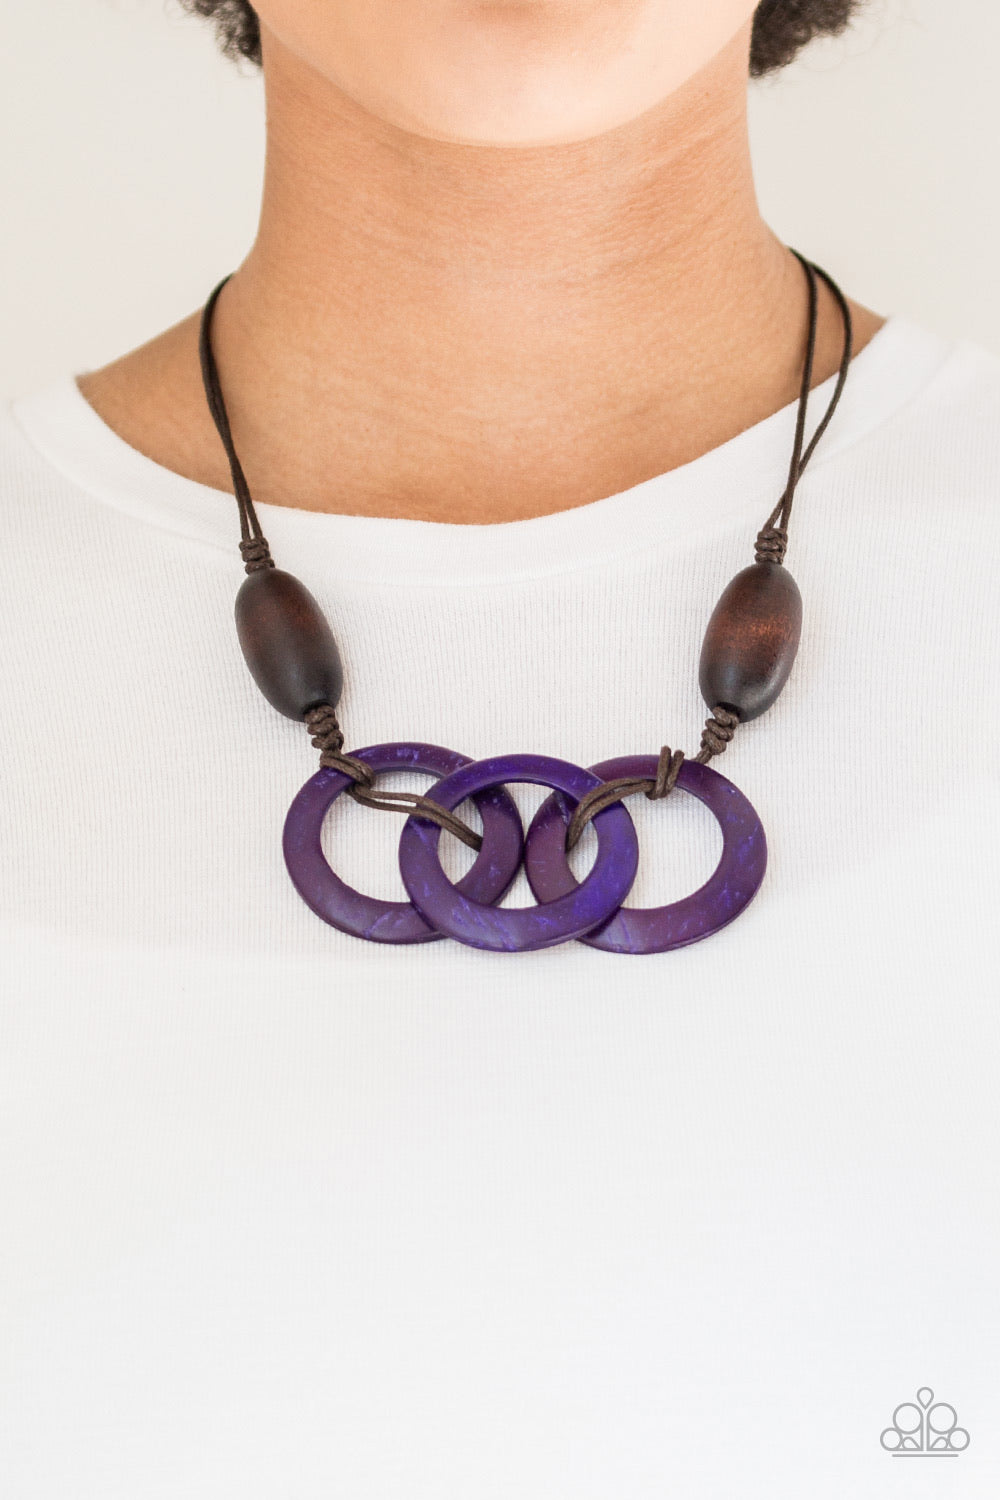 The Top TENACIOUS - Purple Necklace | Paparazzi Accessories | $5.00